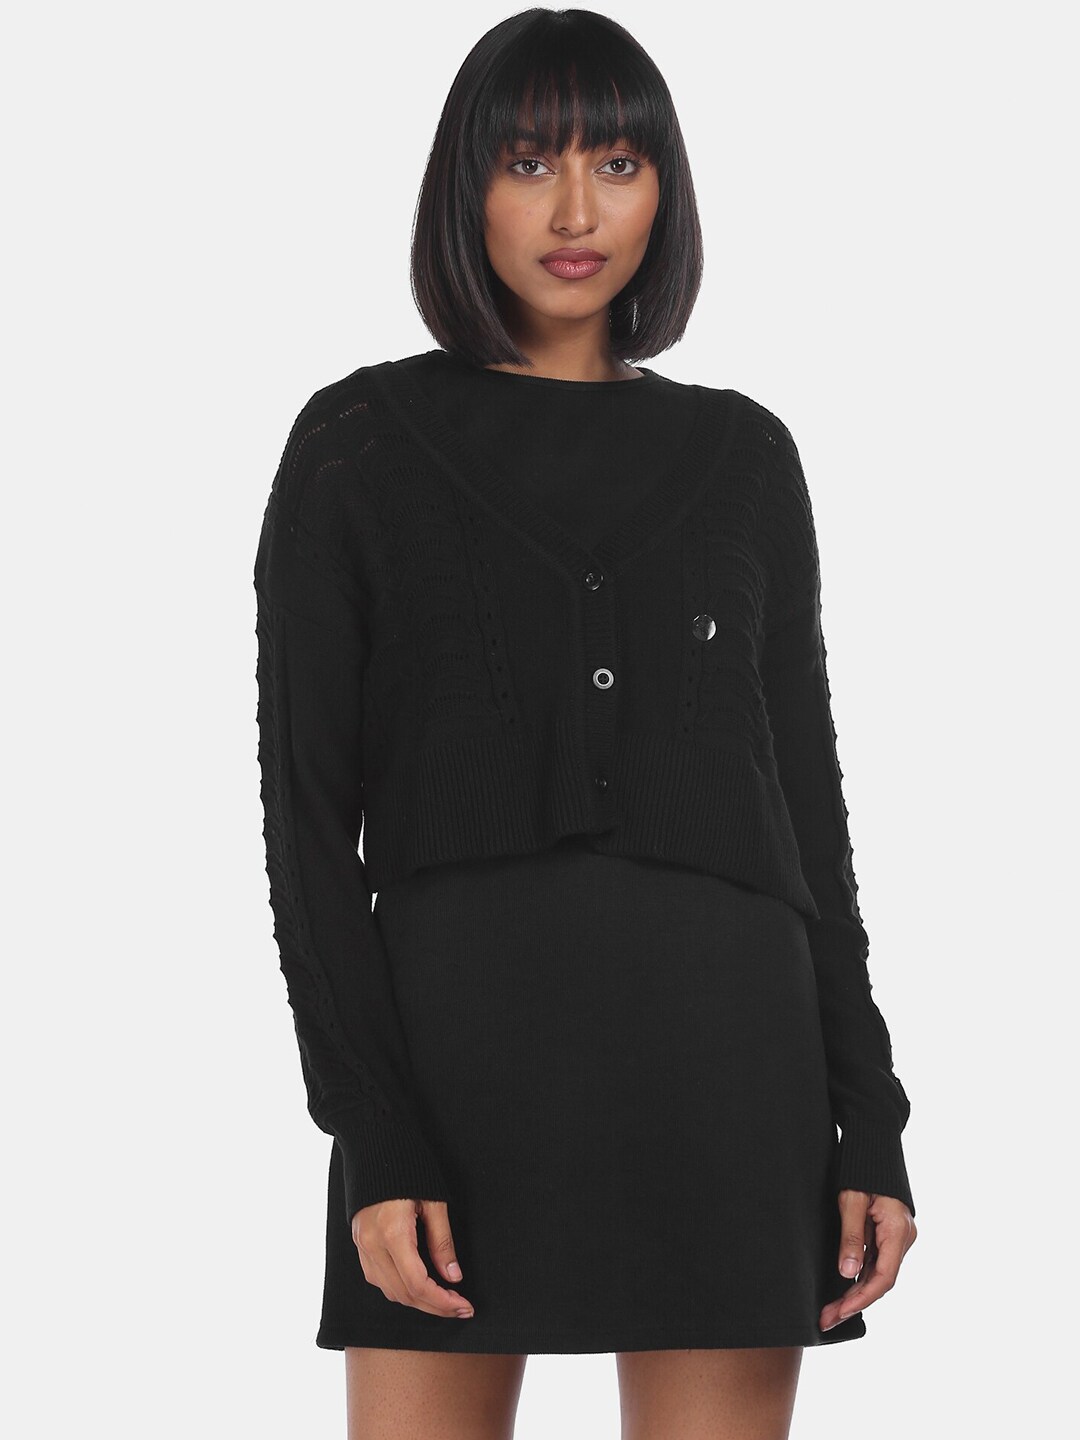 Aeropostale Women Black Knit Cardigan Sweater Price in India